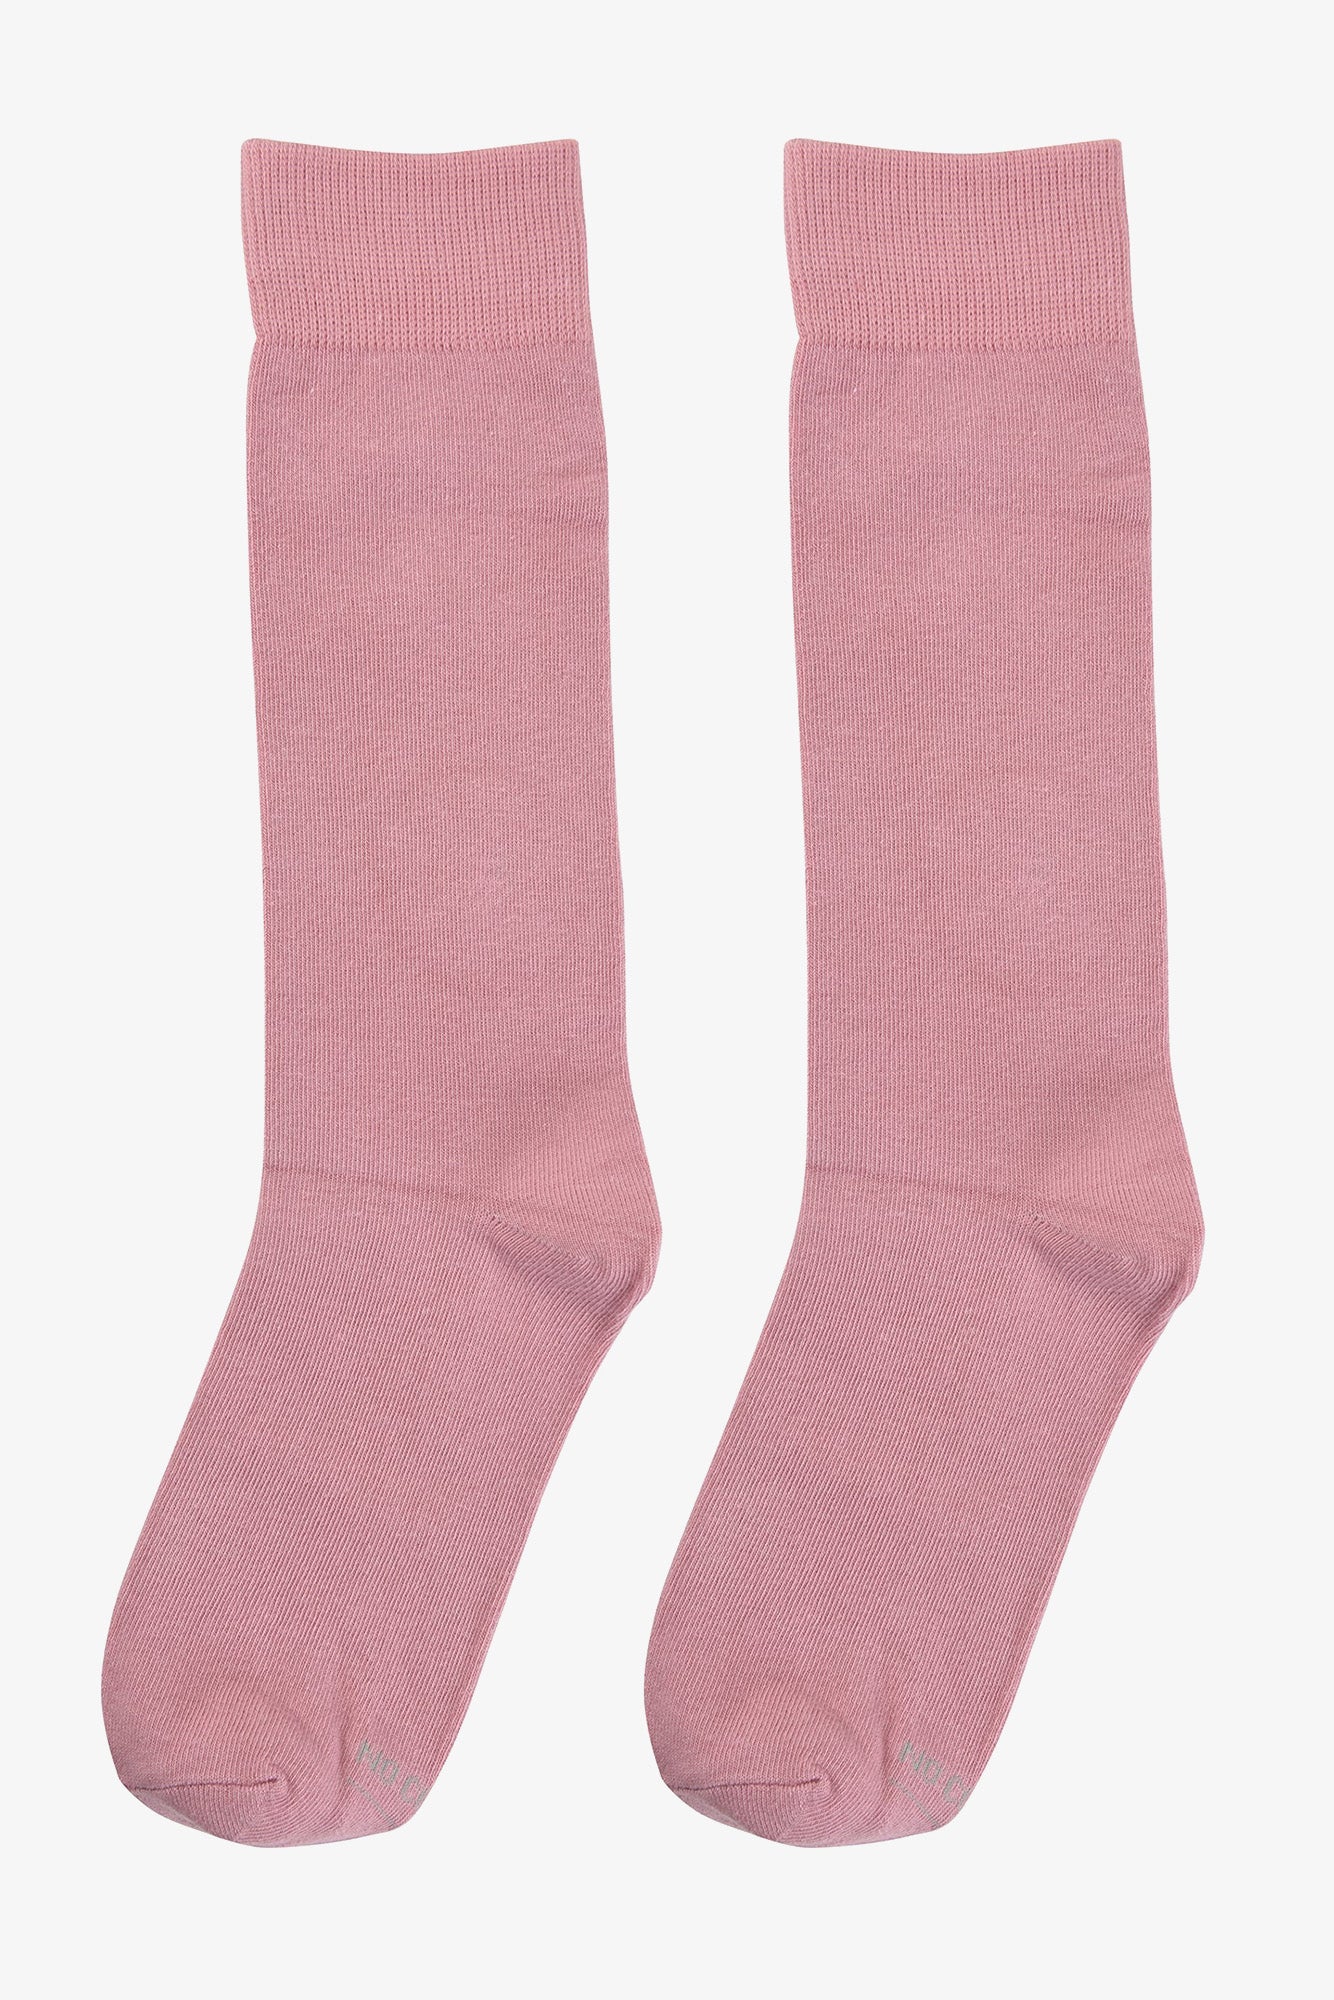 Solid Dusty Rose Groomsmen Socks by No Cold Feet